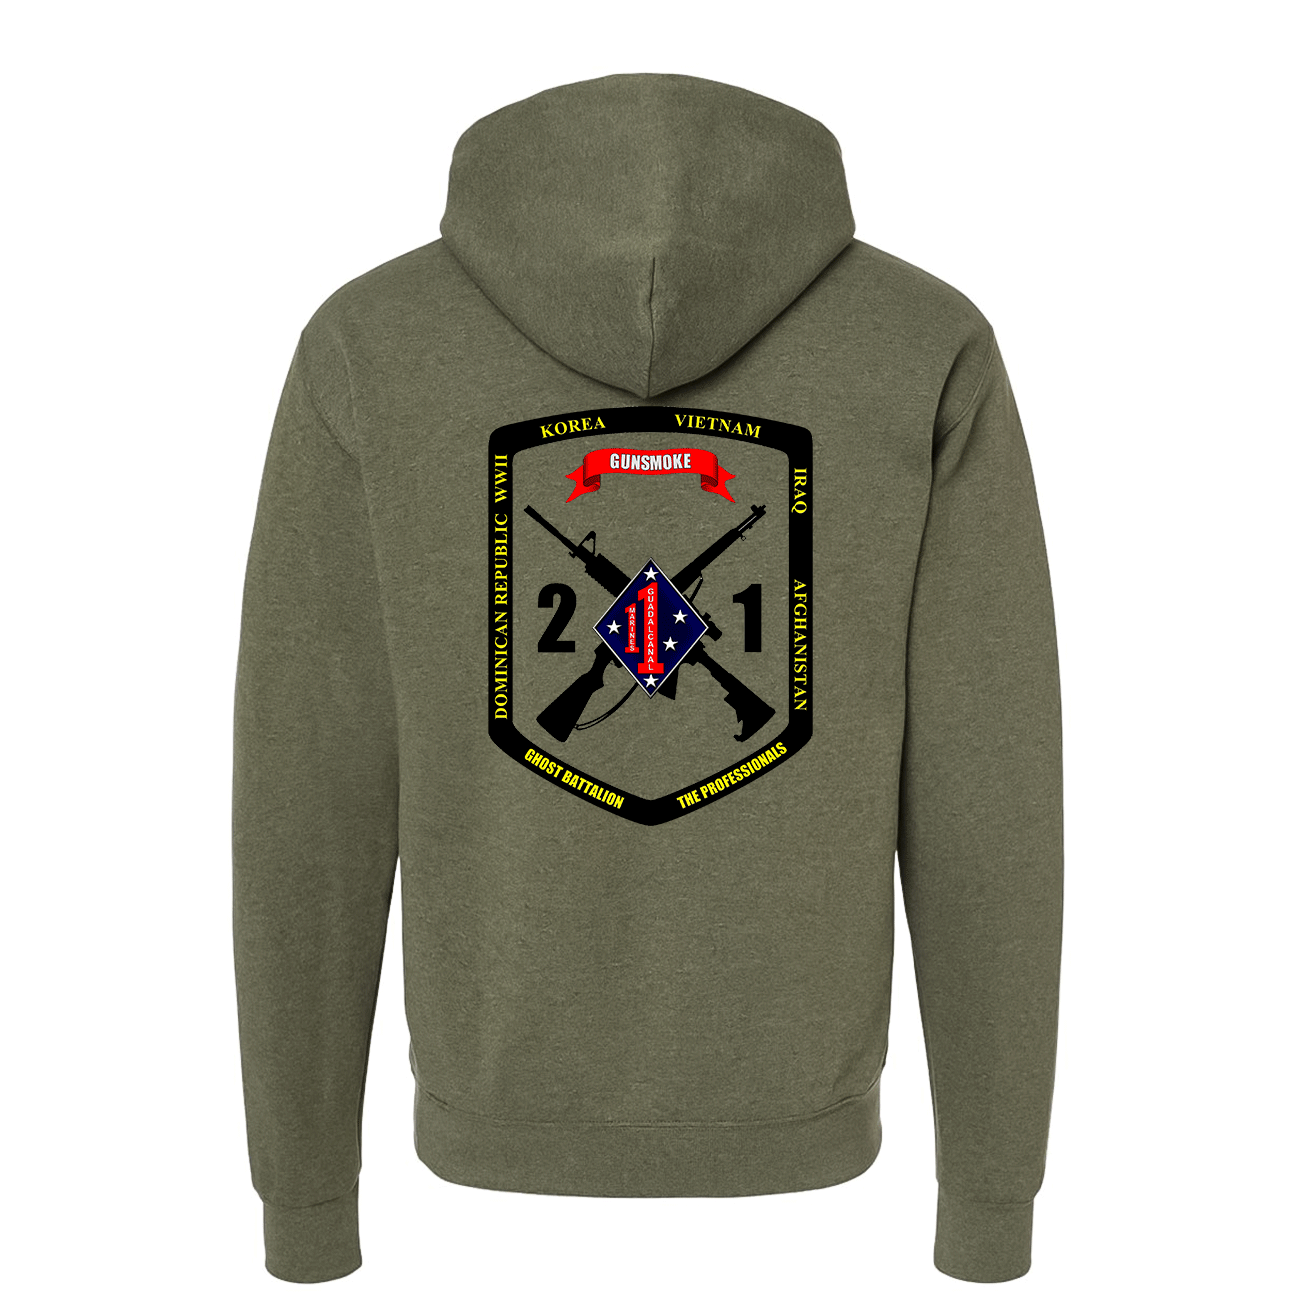 2nd Battalion 1st Marines Unit hoodie Gunsmoke